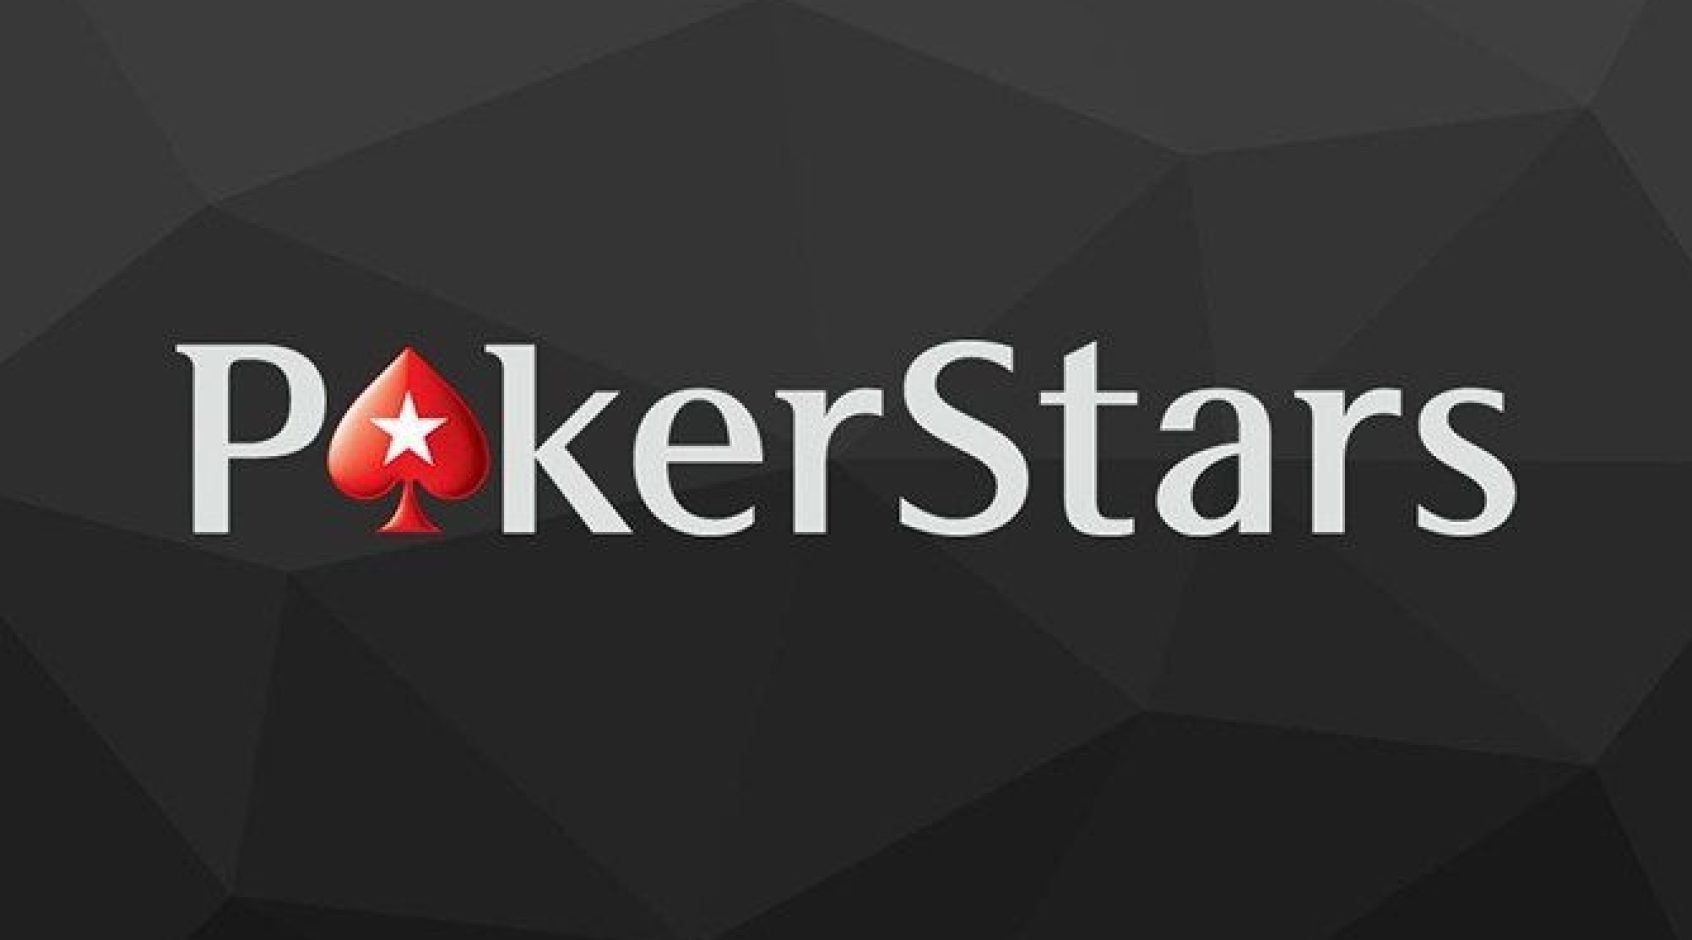 Poker stars com. Покерстарс. Pokerstars логотип. Покер Стар. Покер старс картинки.